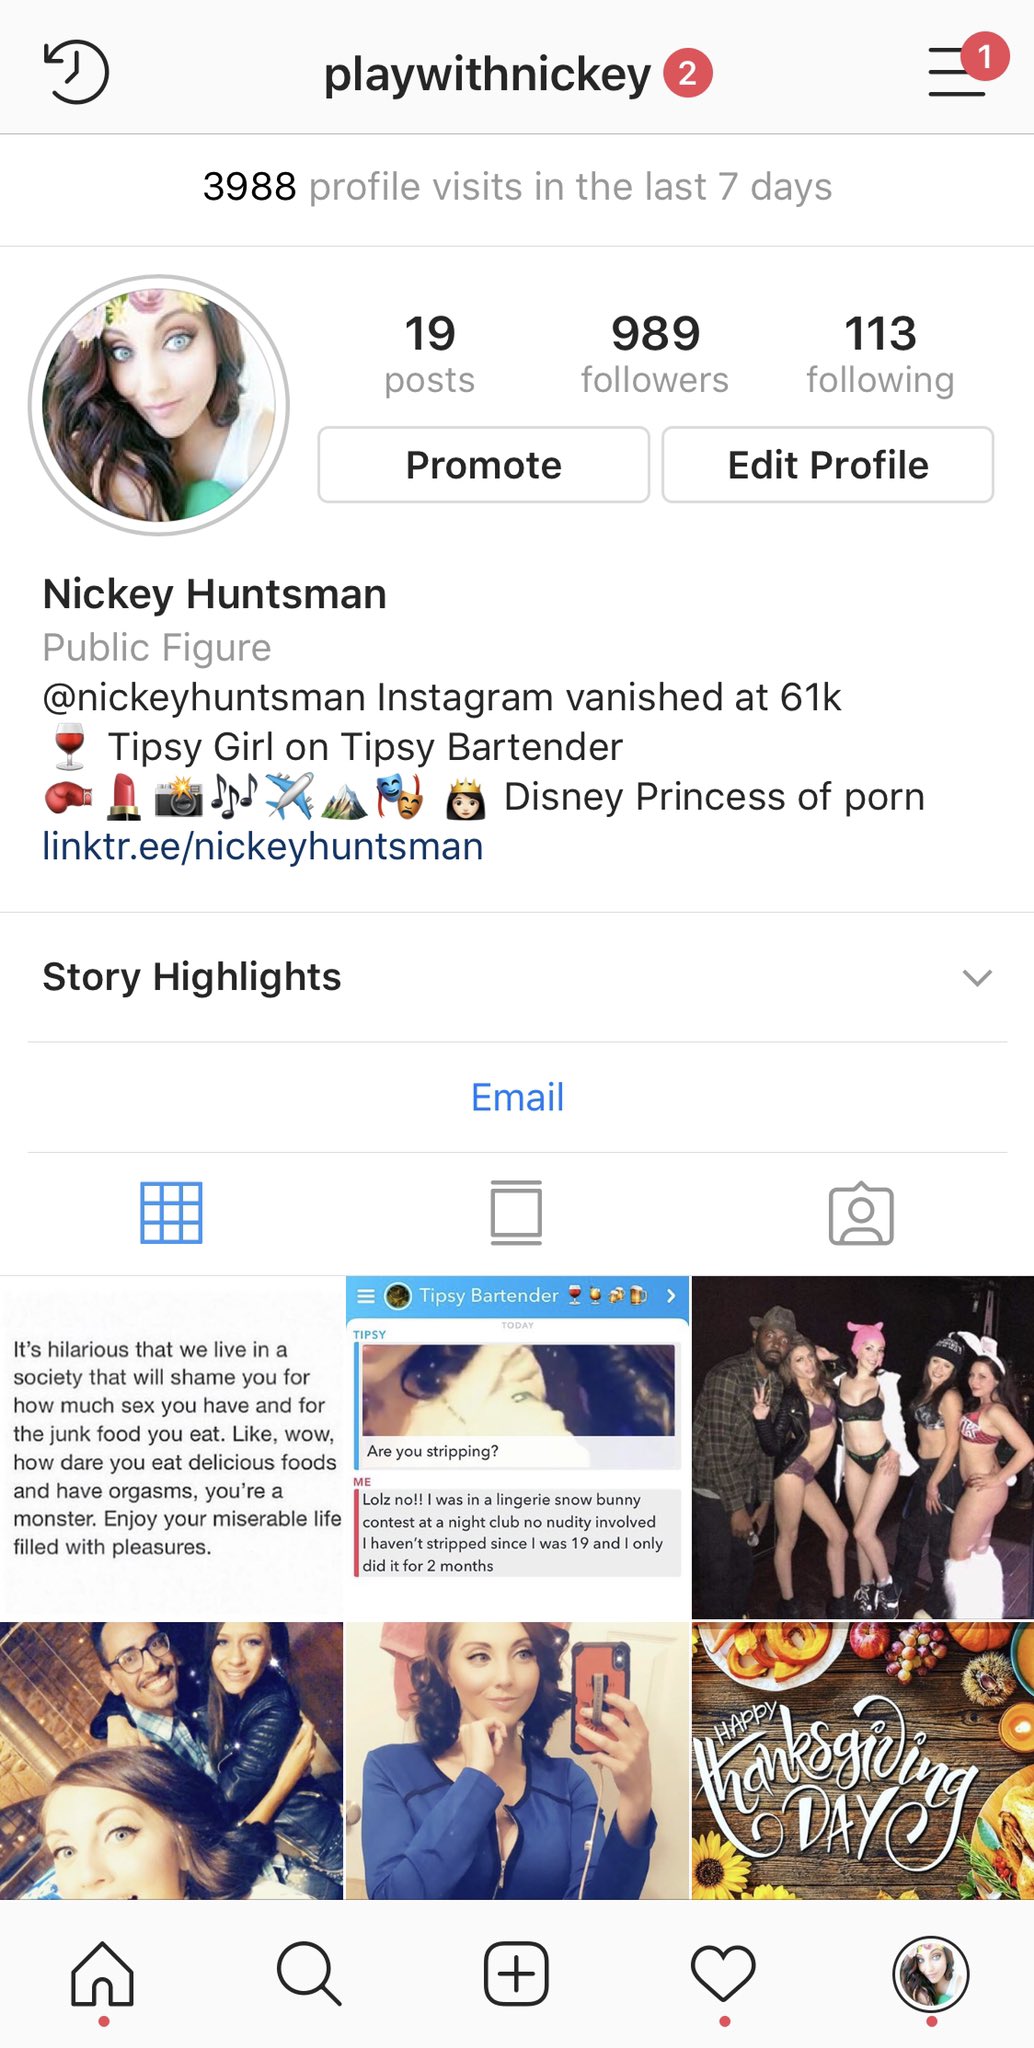 Nickey huntsman instagram